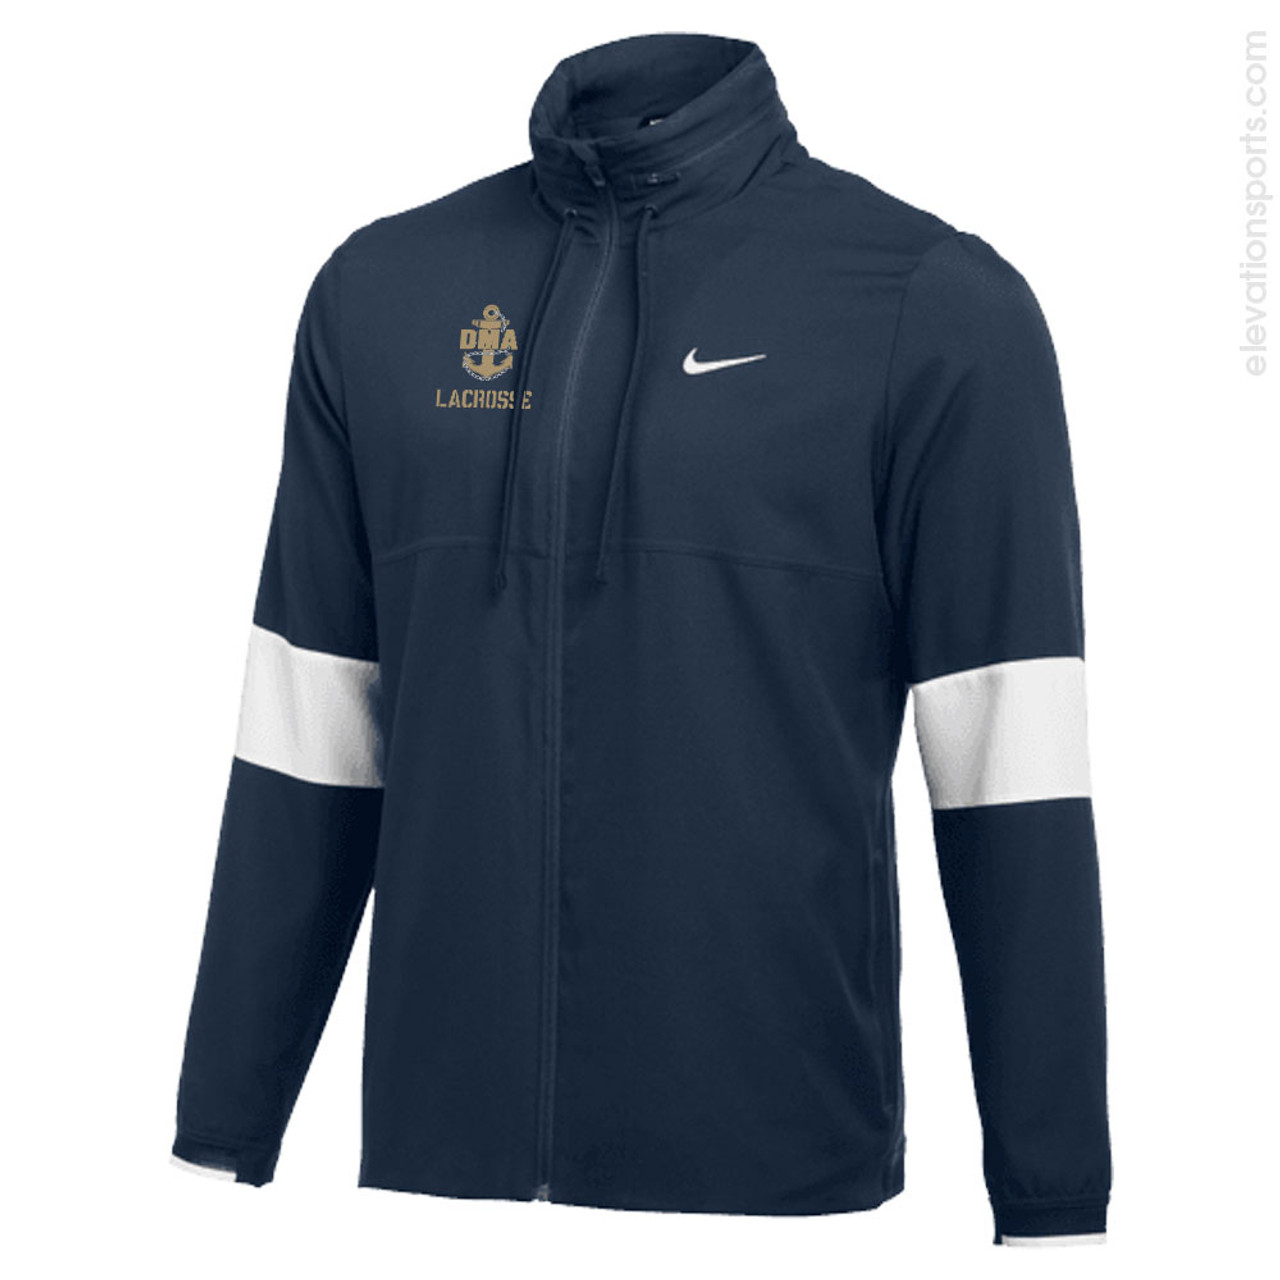 Custom Nike Dry Team Jackets | Elevation Sports